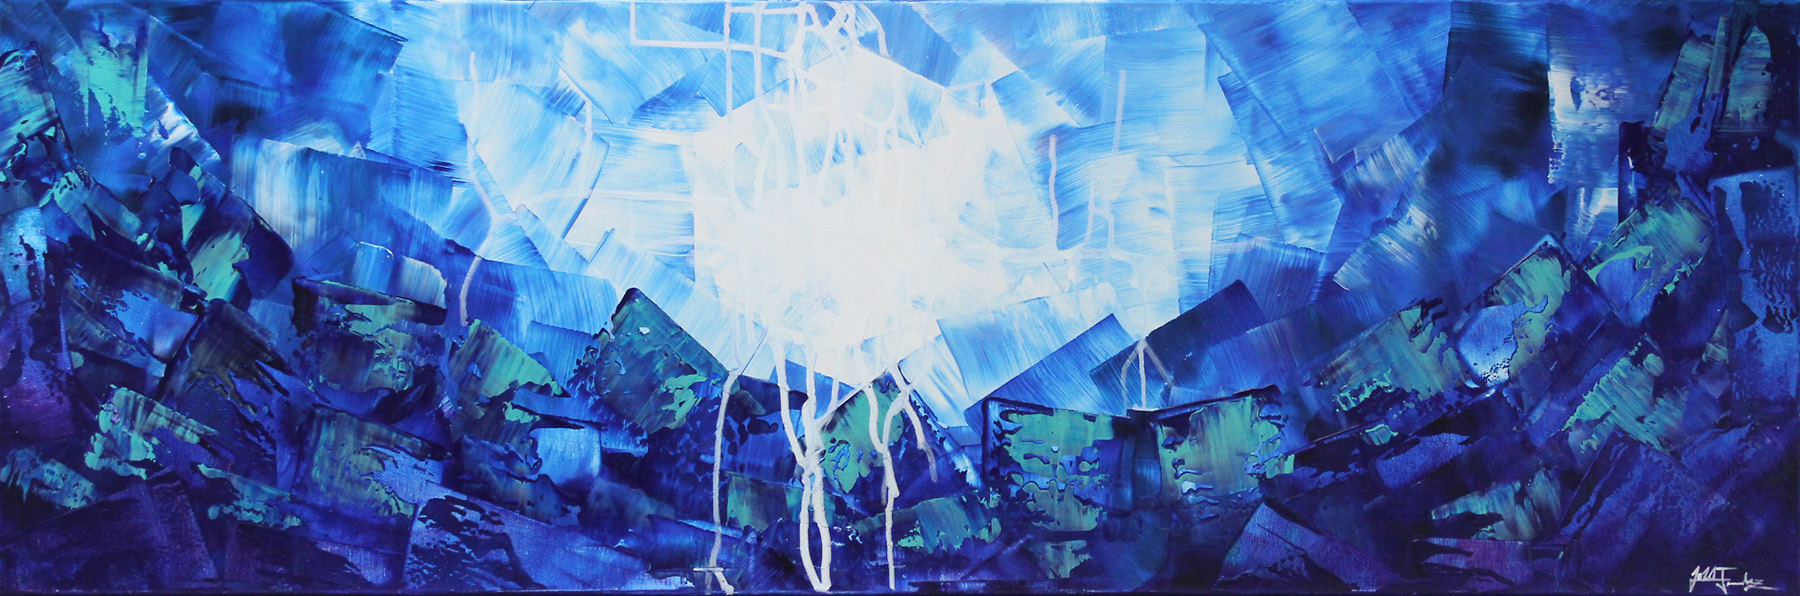 J. Fernandez: "Northern Lights: Reflection III", Originalgemälde (Unikat), Acrylbilder